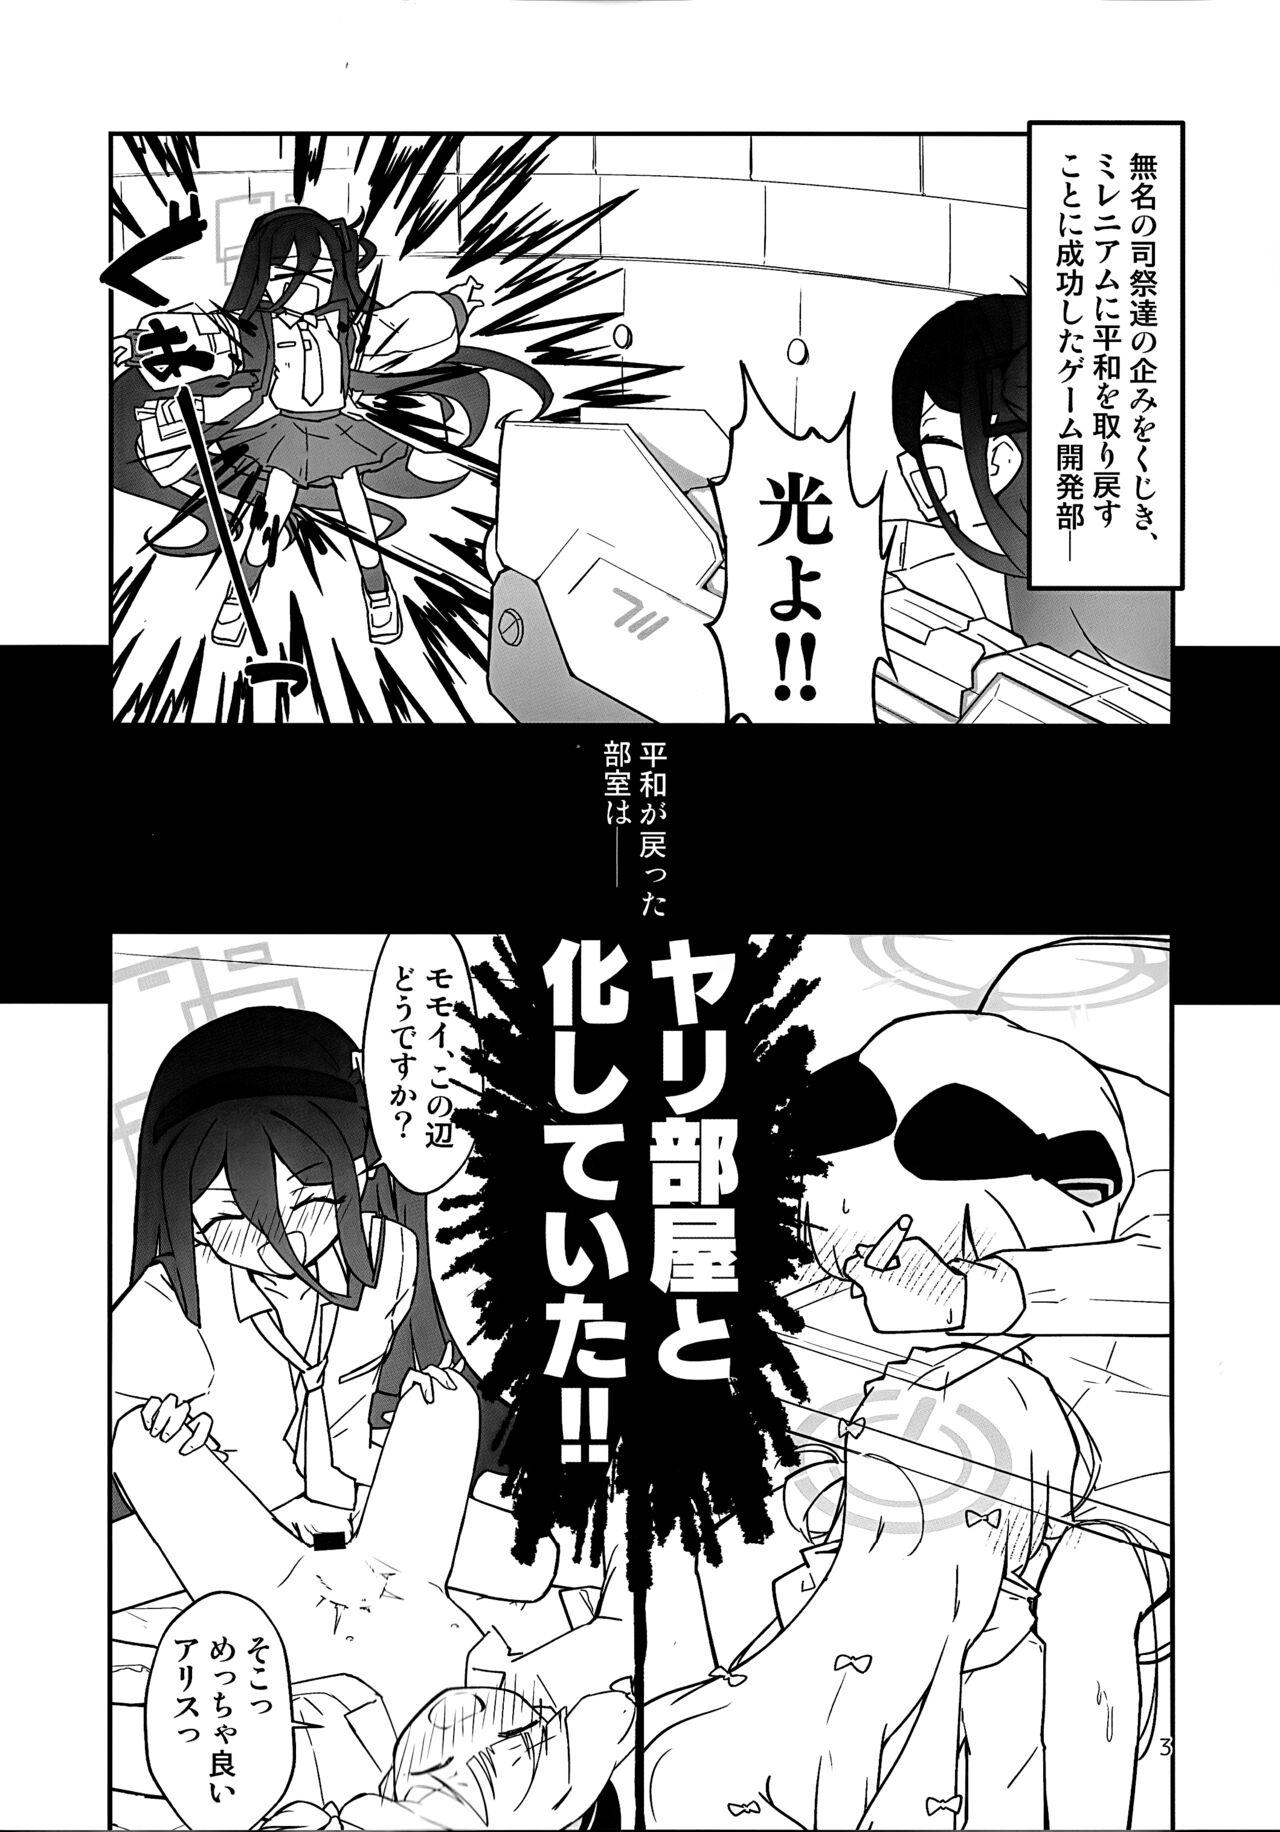 Spit “ふた”りで勇者に“なり”たいです! - Blue archive Female Domination - Page 2